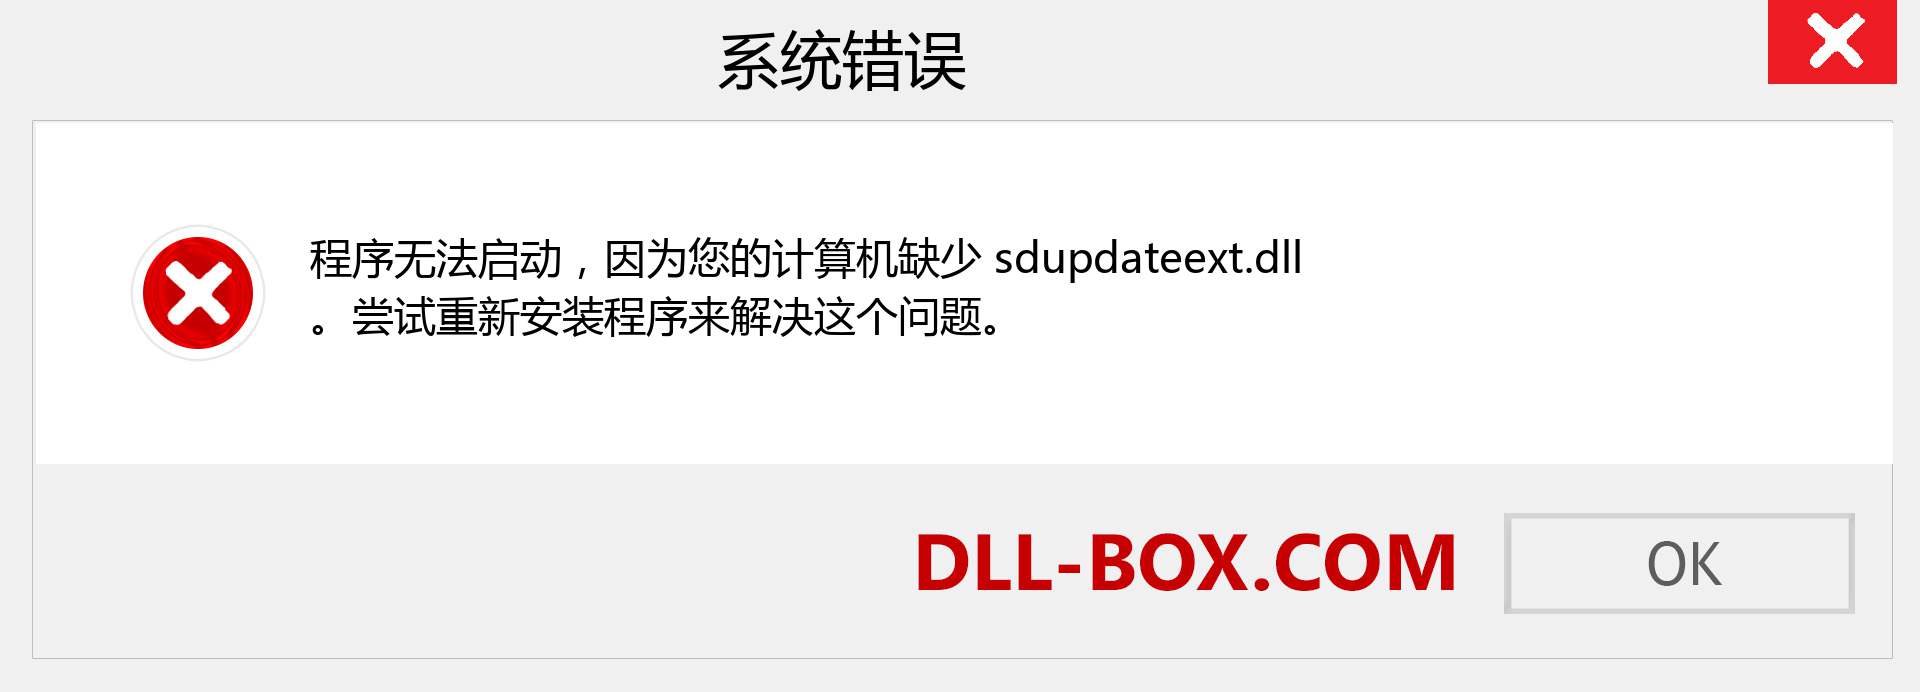 sdupdateext.dll 文件丢失？。 适用于 Windows 7、8、10 的下载 - 修复 Windows、照片、图像上的 sdupdateext dll 丢失错误